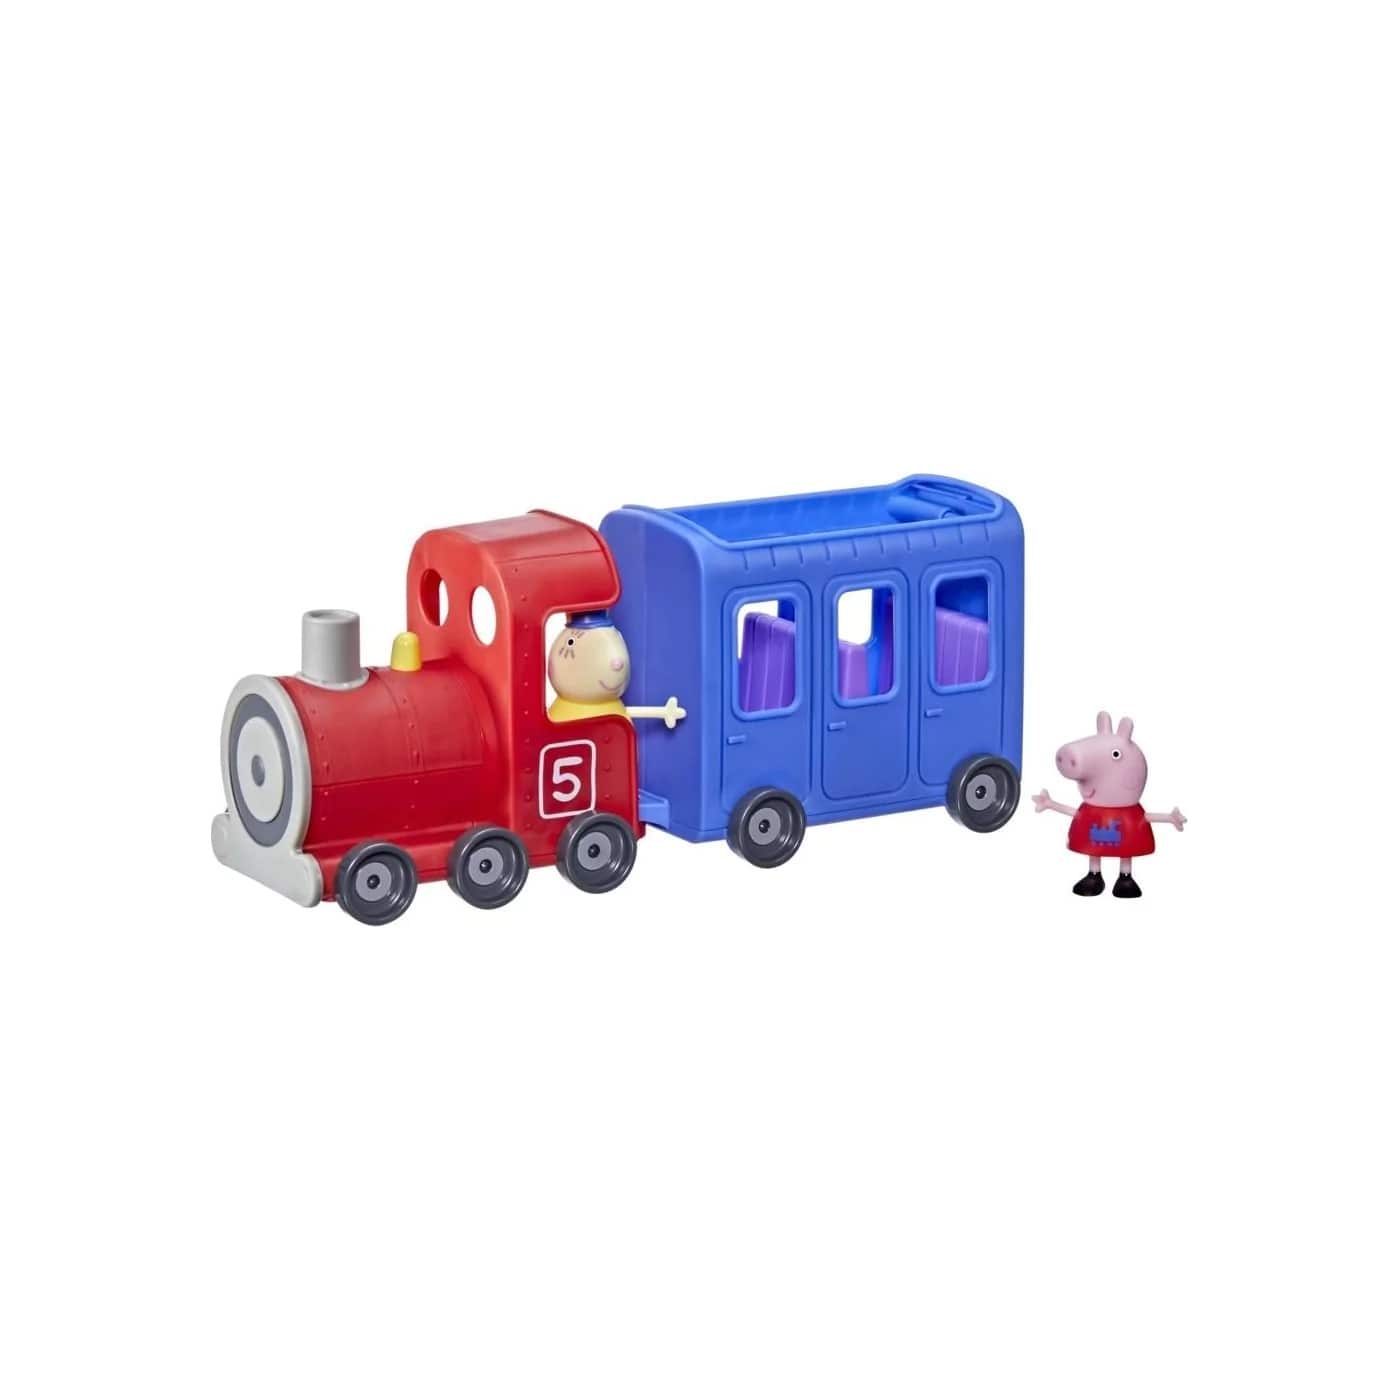 Hasbro Peppa Pig Miss Rabbits Train